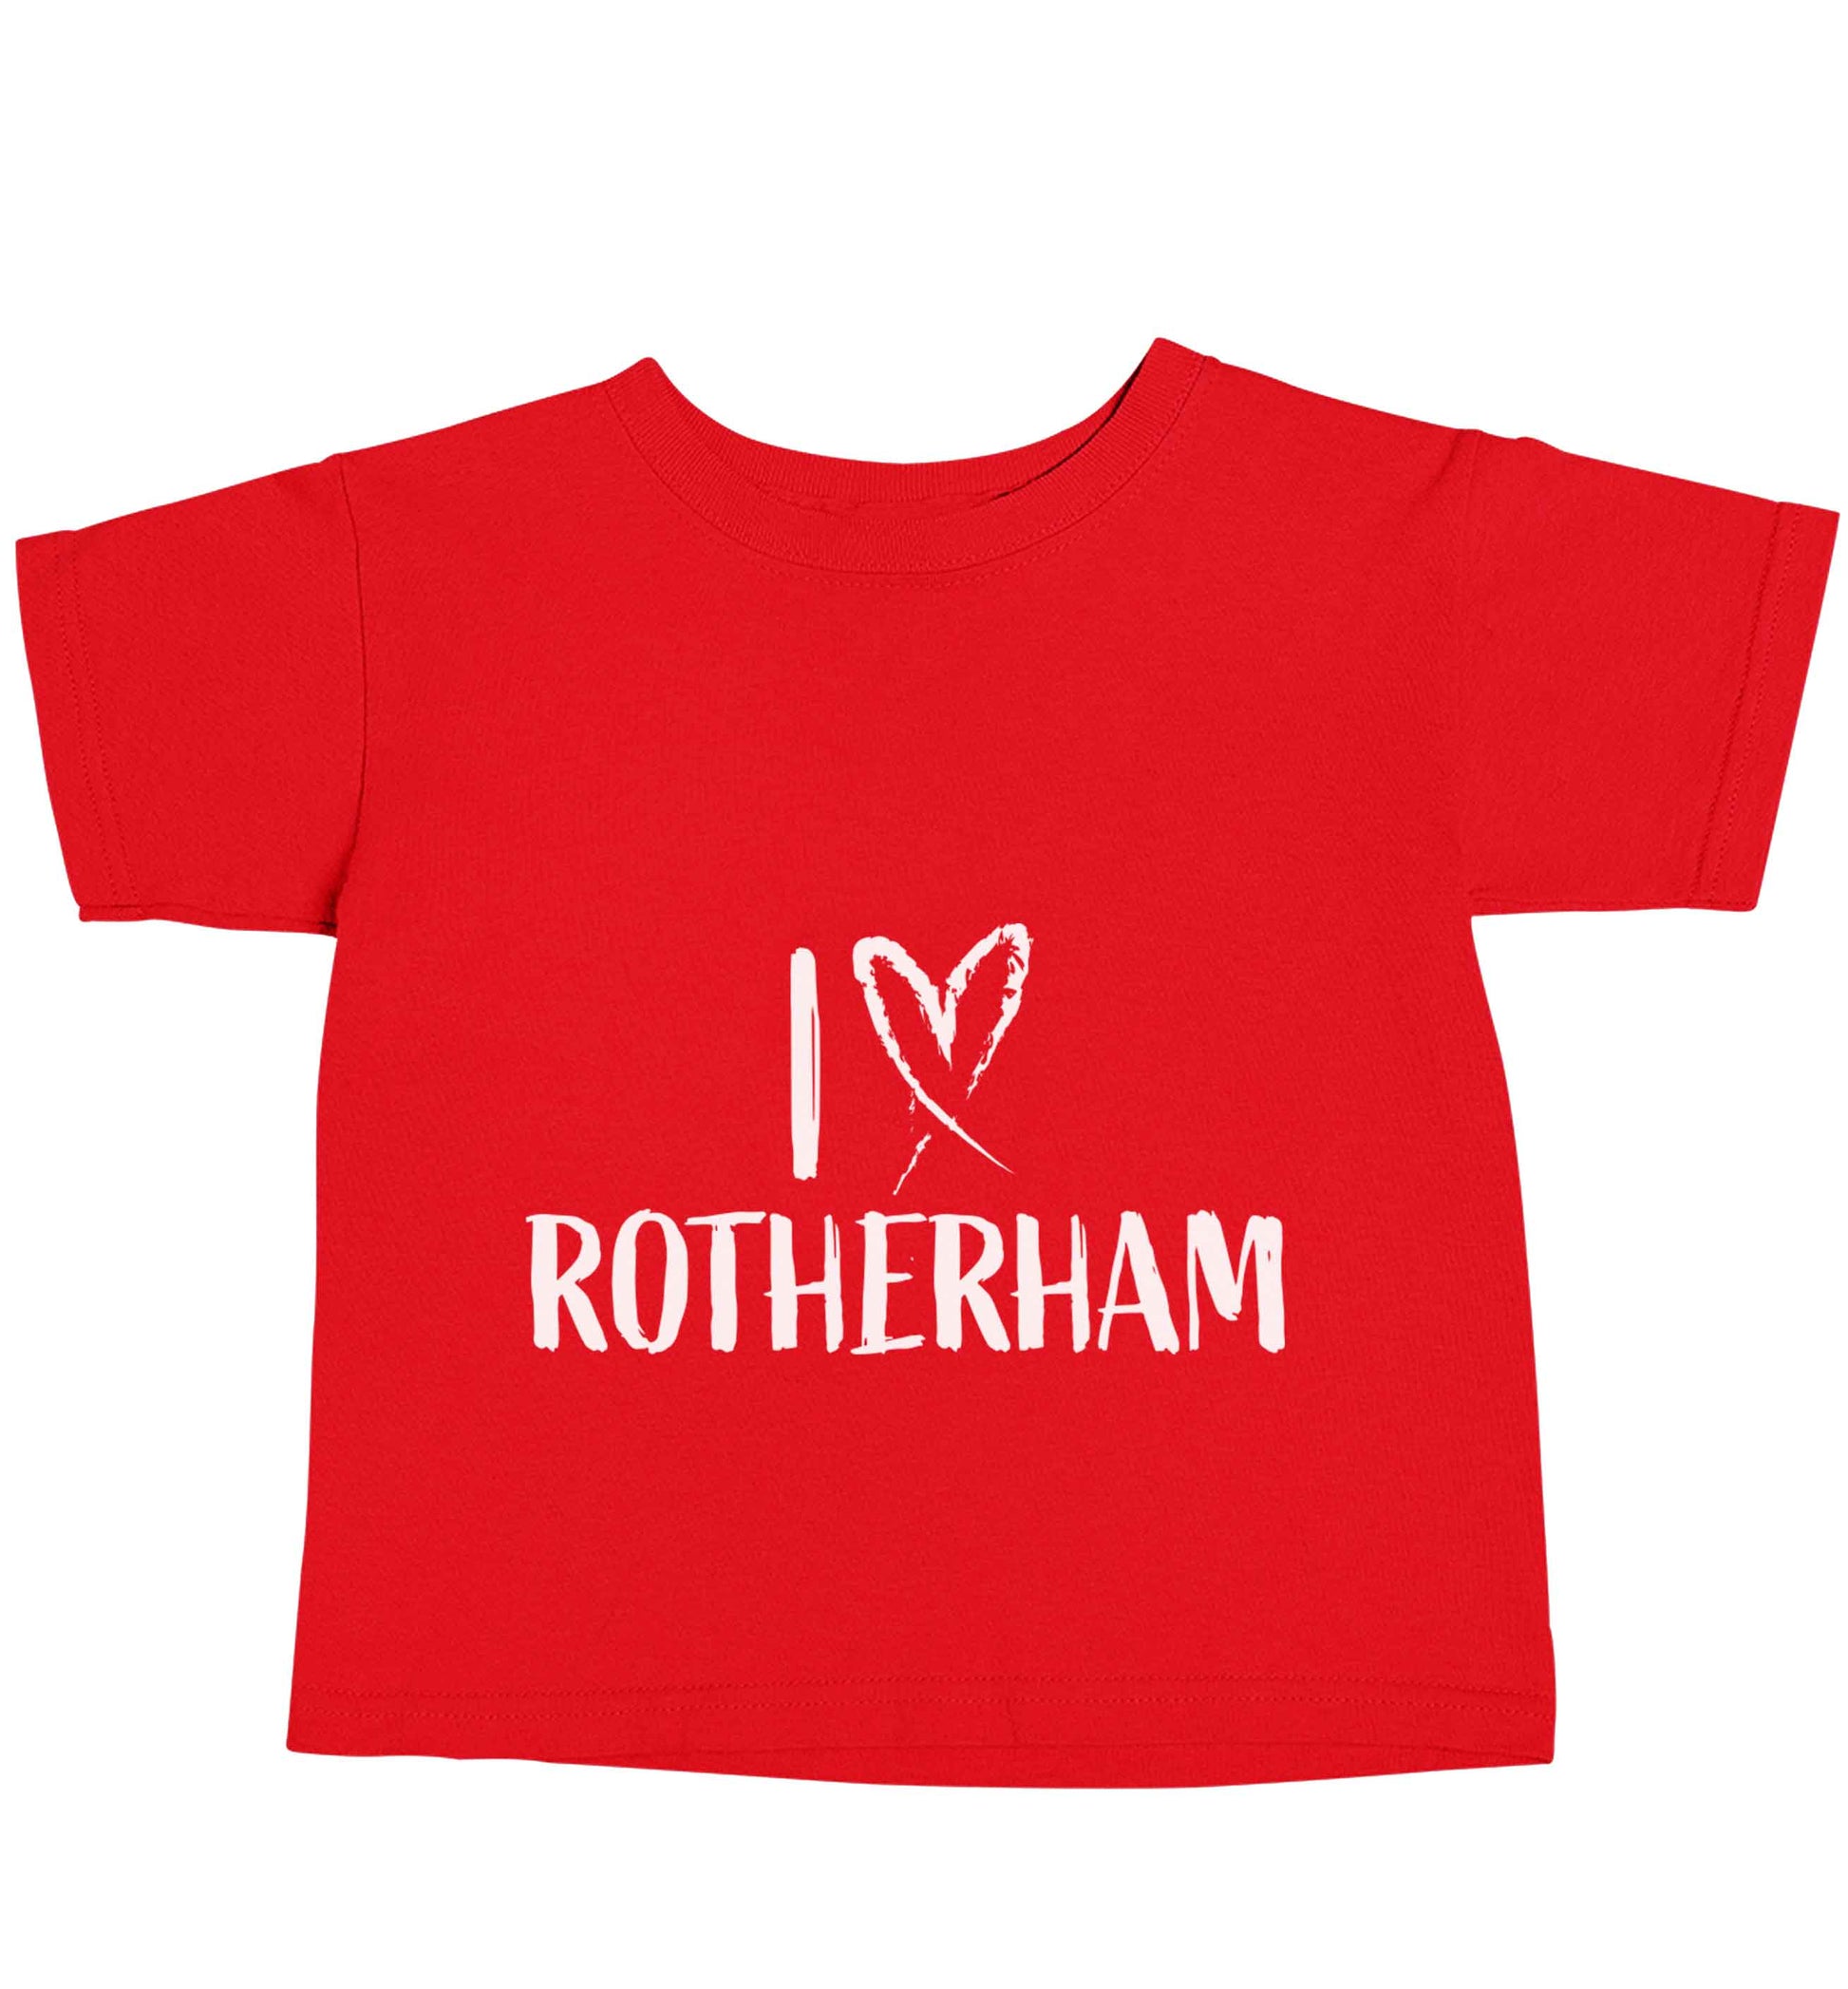 I love Rotherham red baby toddler Tshirt 2 Years